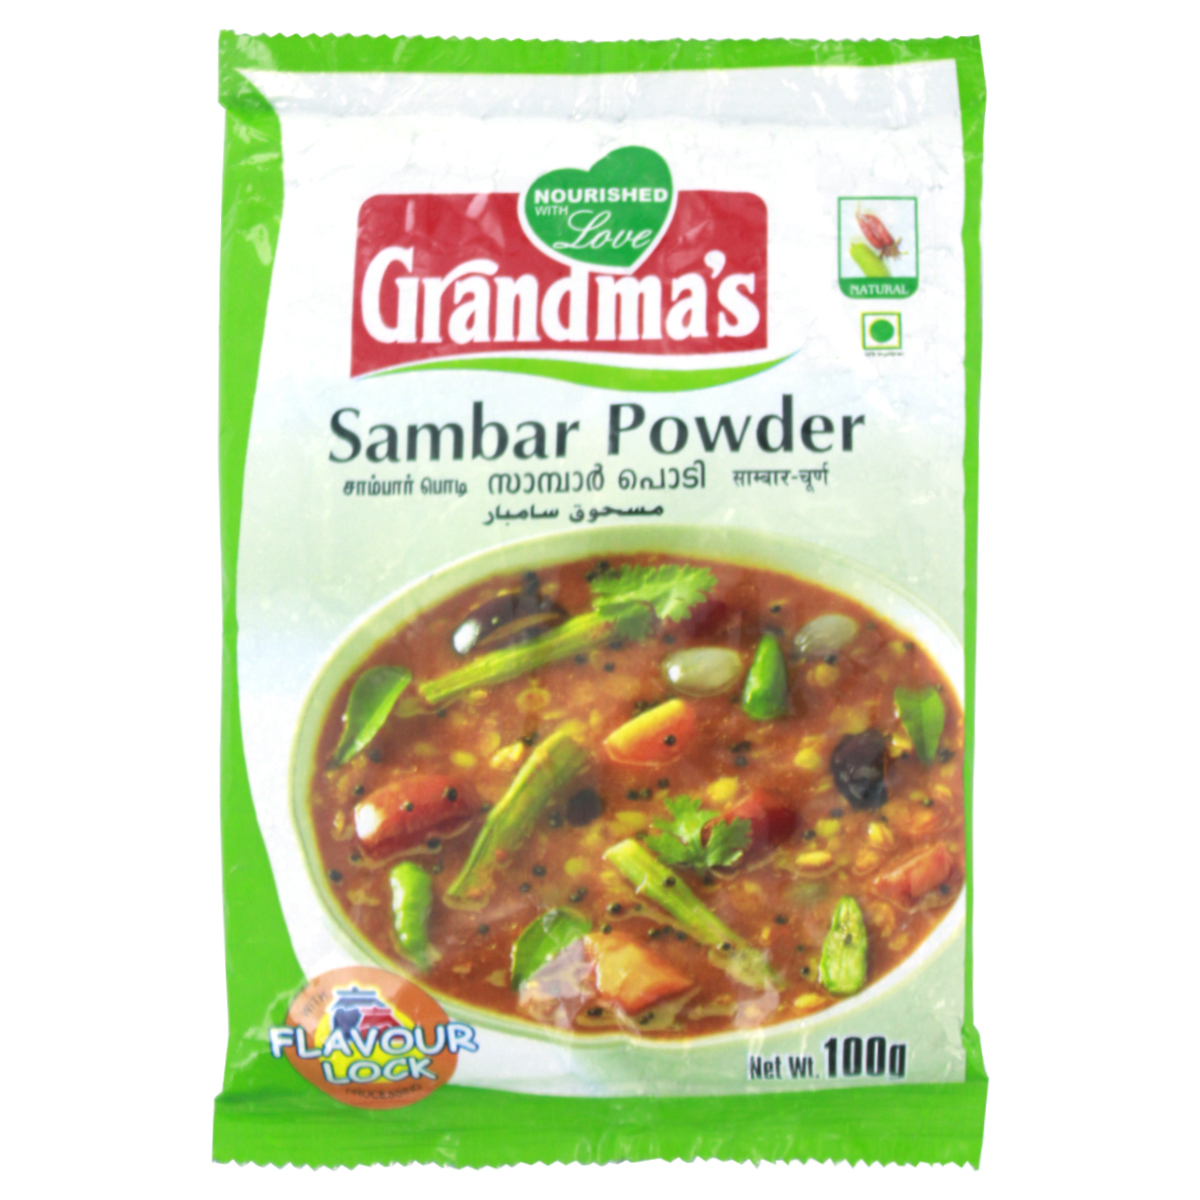 Grandmas Sambar Powder 100g